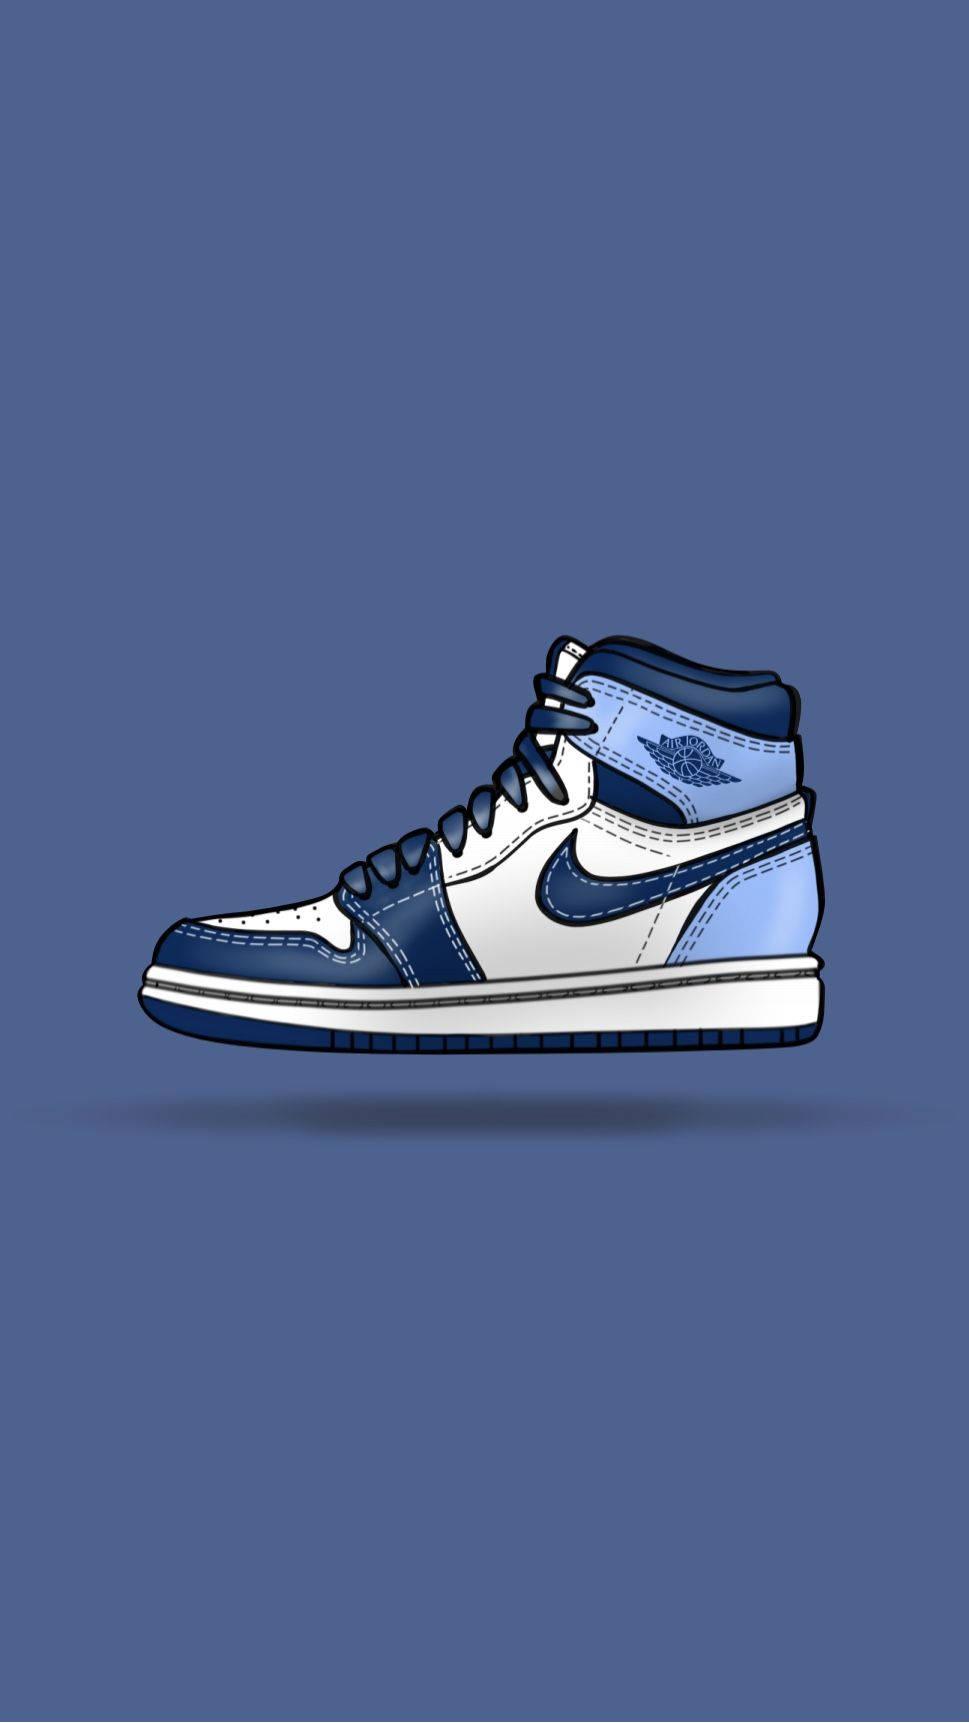 Nike Shoes Air Jordan Blue Wallpaper